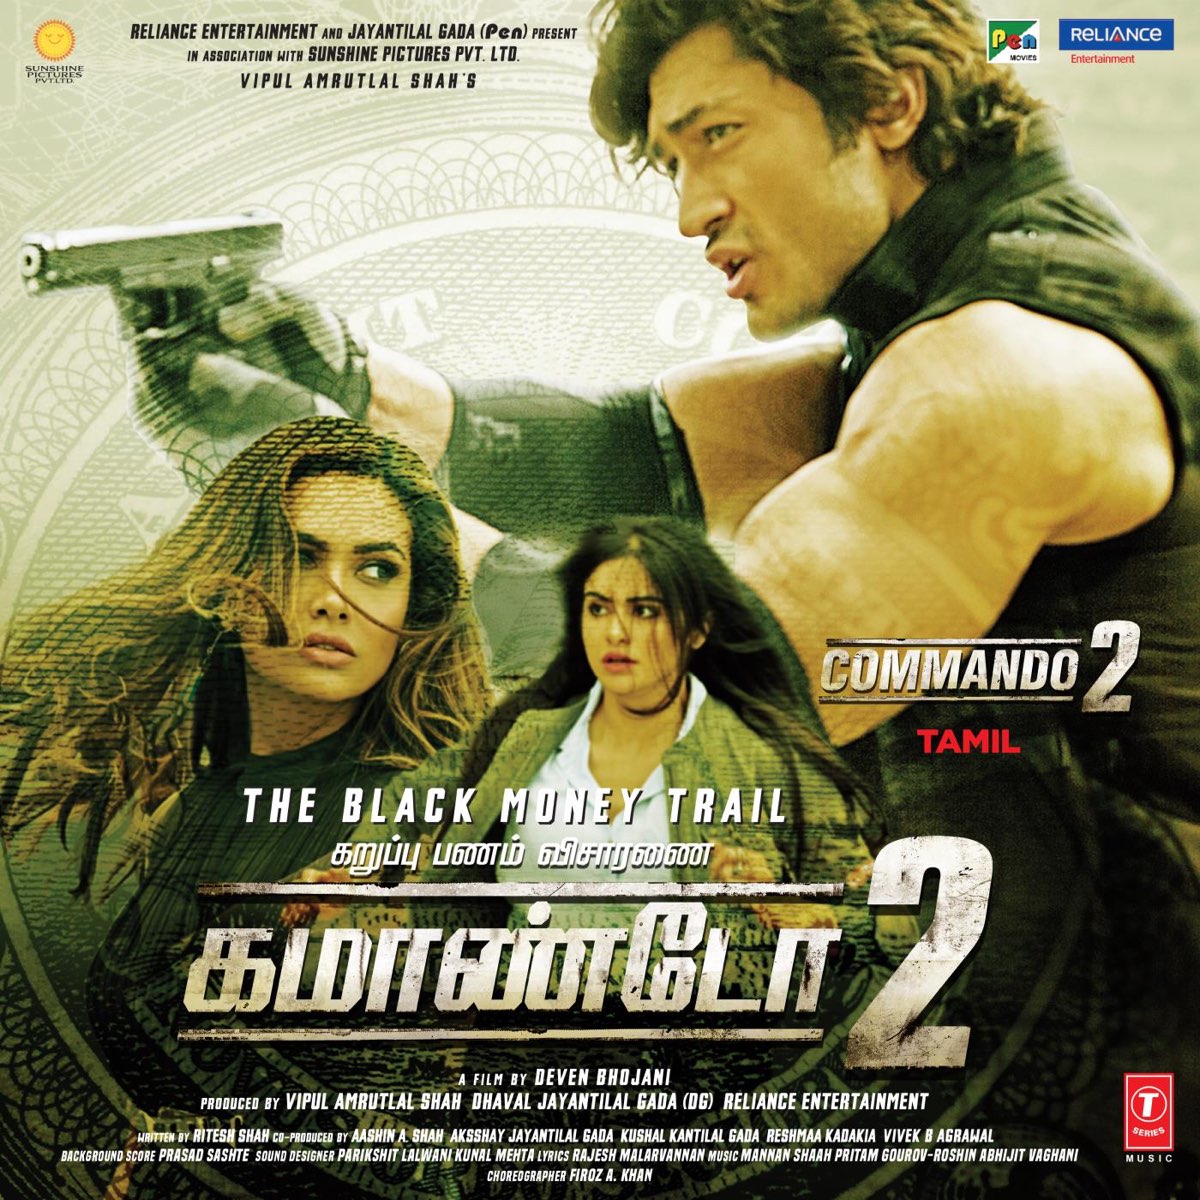 Commando 2 (Tamil Version) của Mannan Shaah, Pritam, Gourov-Roshin &  Abhijit Vaghani trên Apple Music